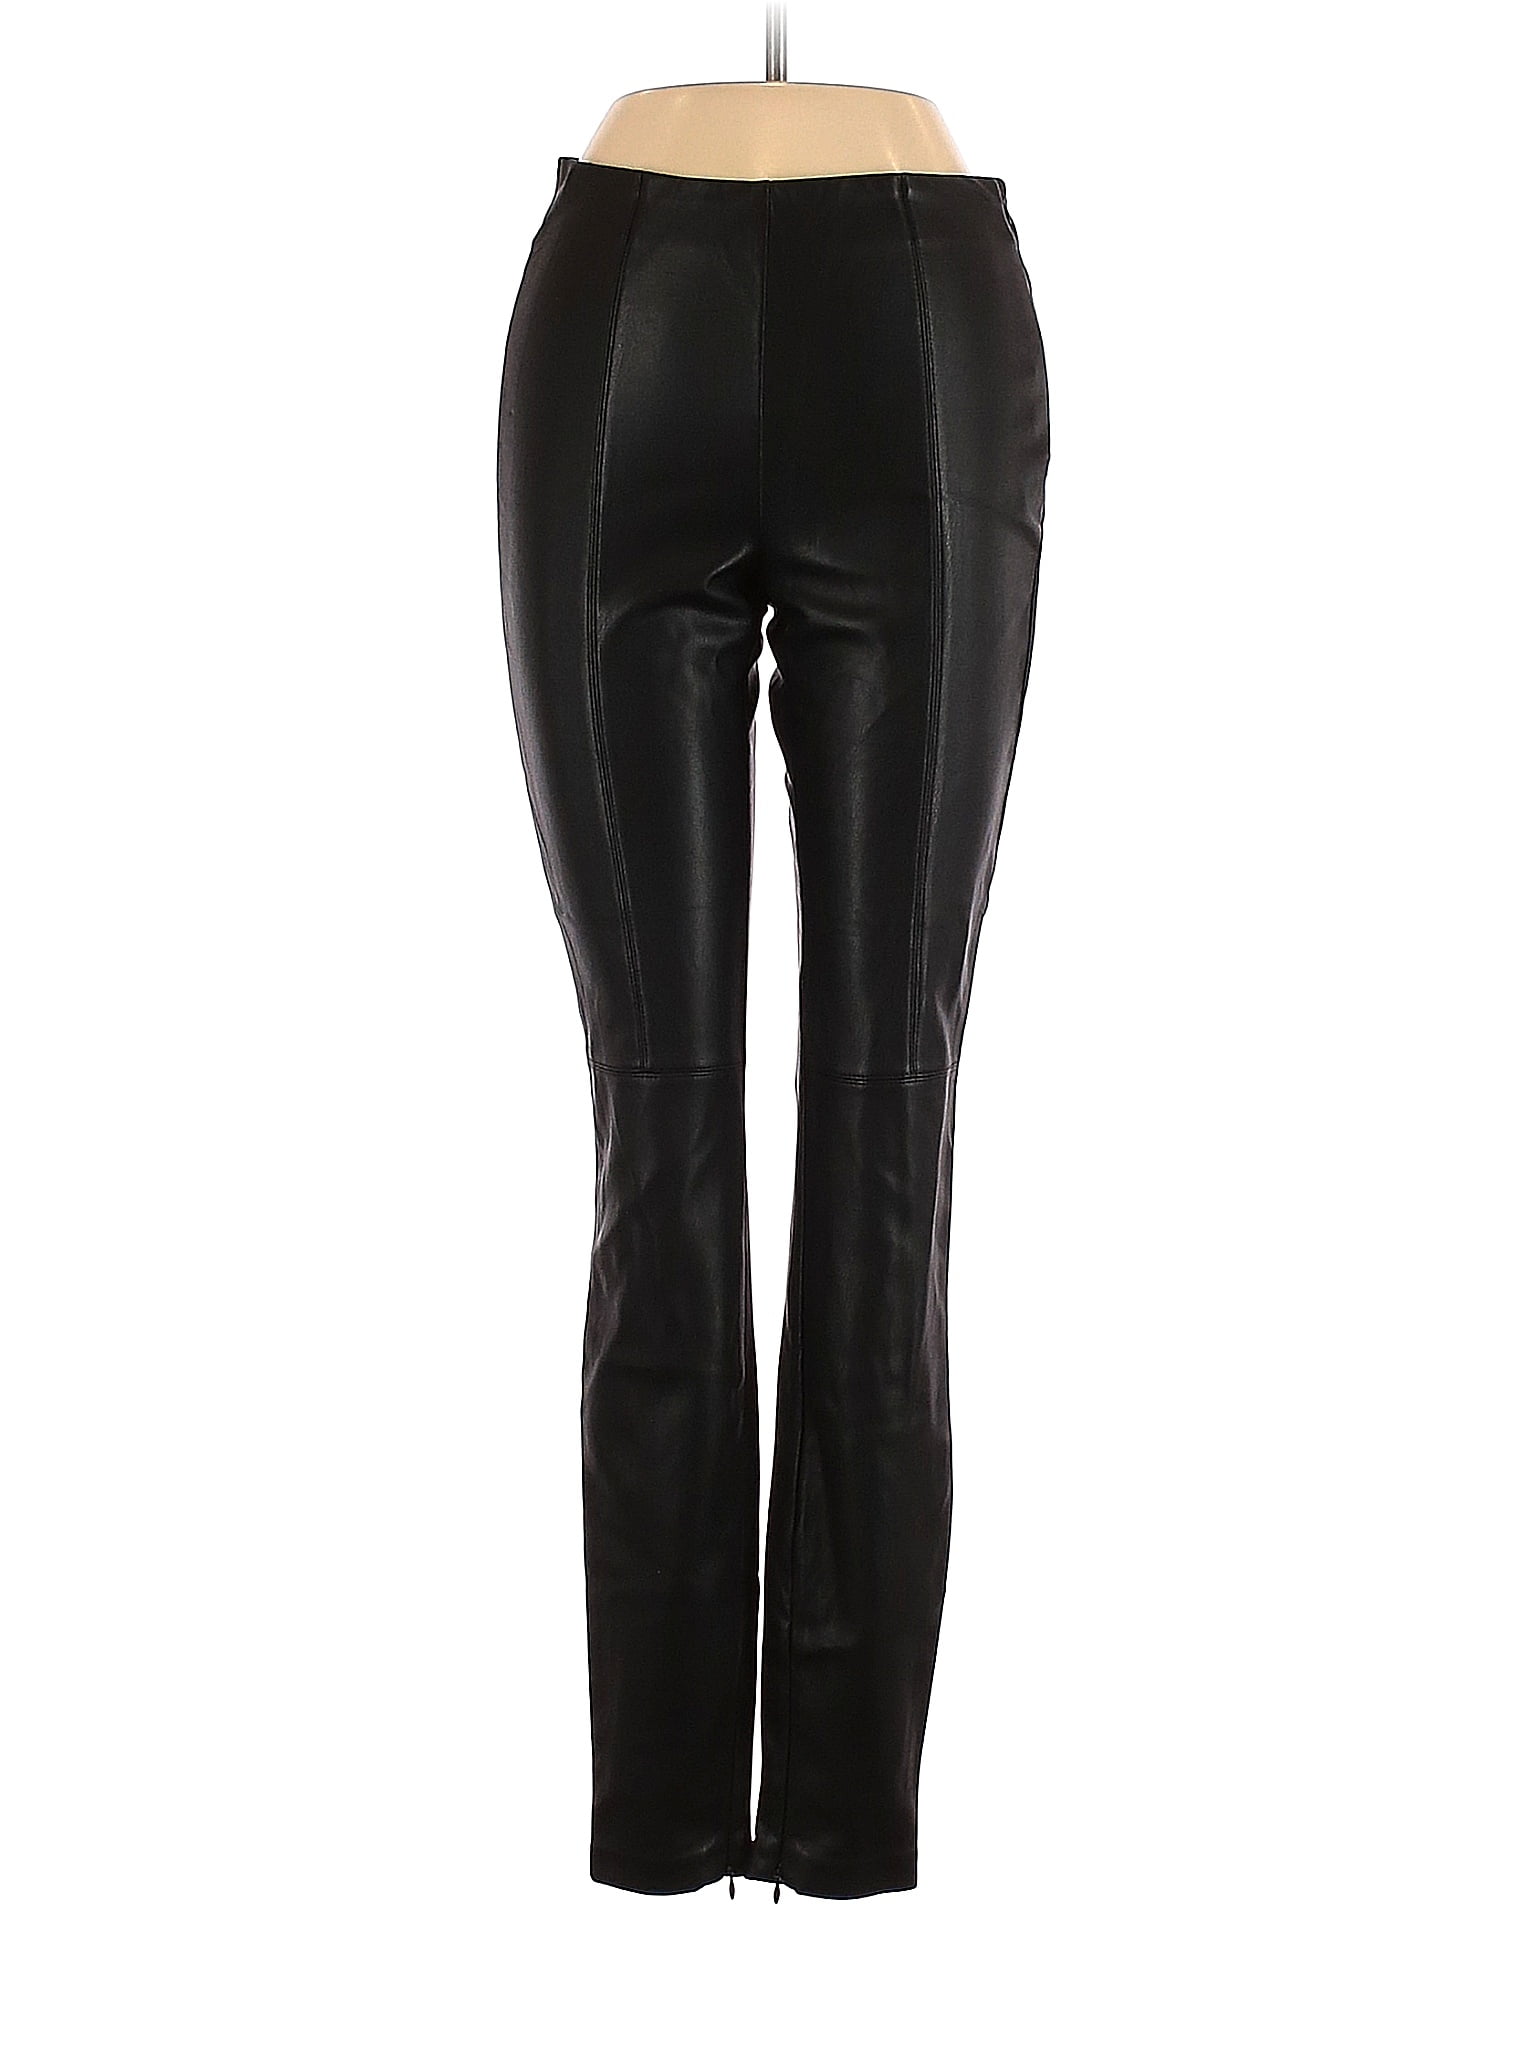 Pre-Owned Trafaluc by Zara Women's Size XS Faux Leather Pants - Walmart.com